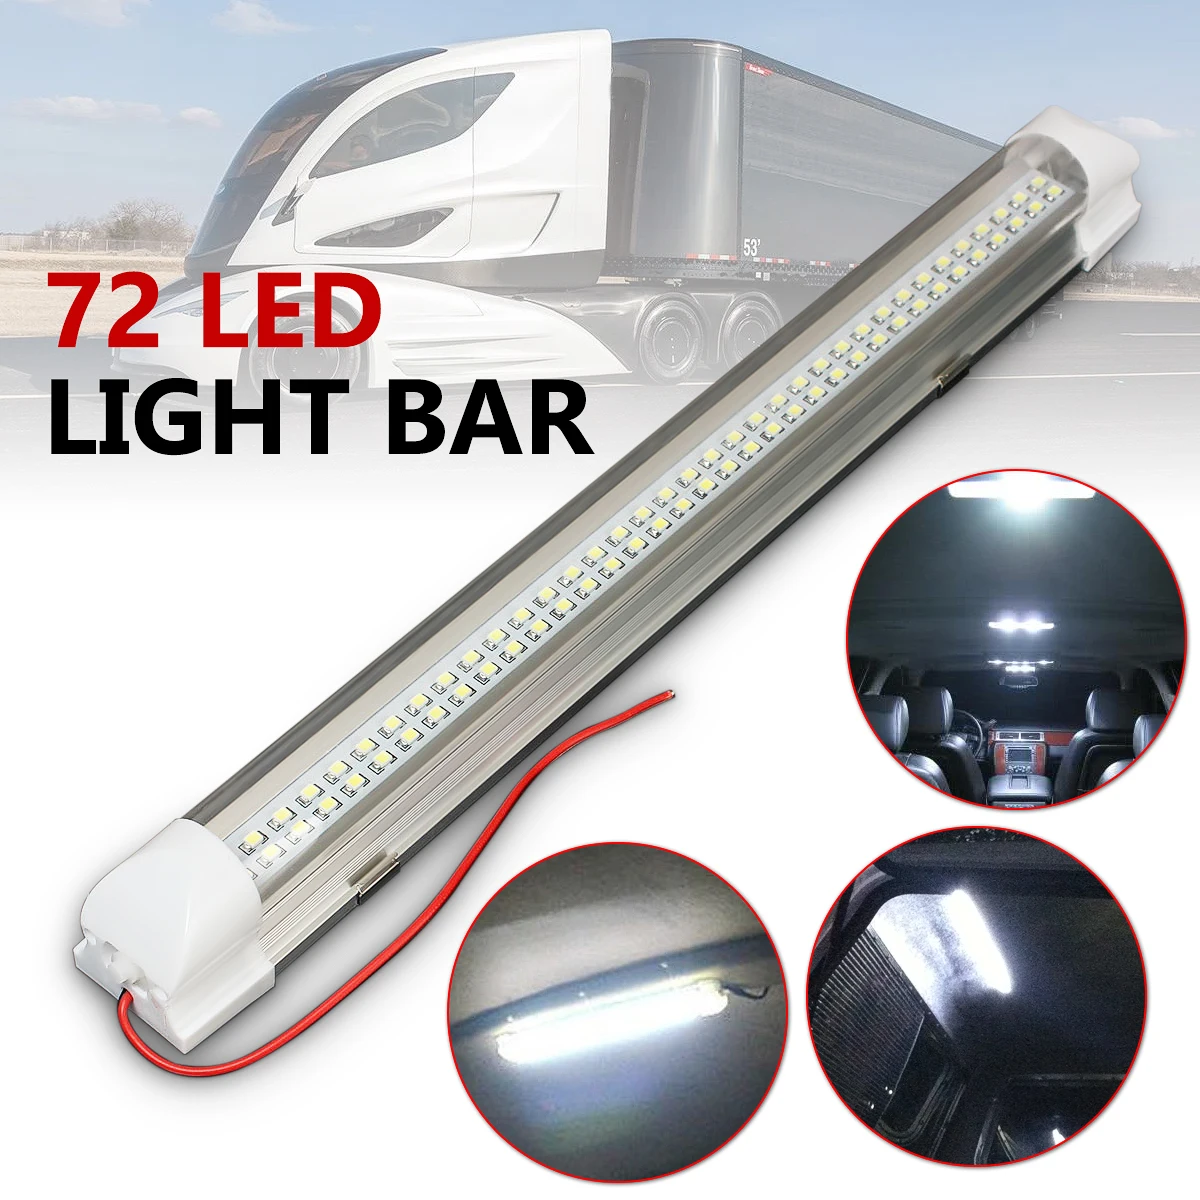 12V 72 LED Interior Light Strip Lamp Bar On/Off Switch Car Caravan Lorry Boat 